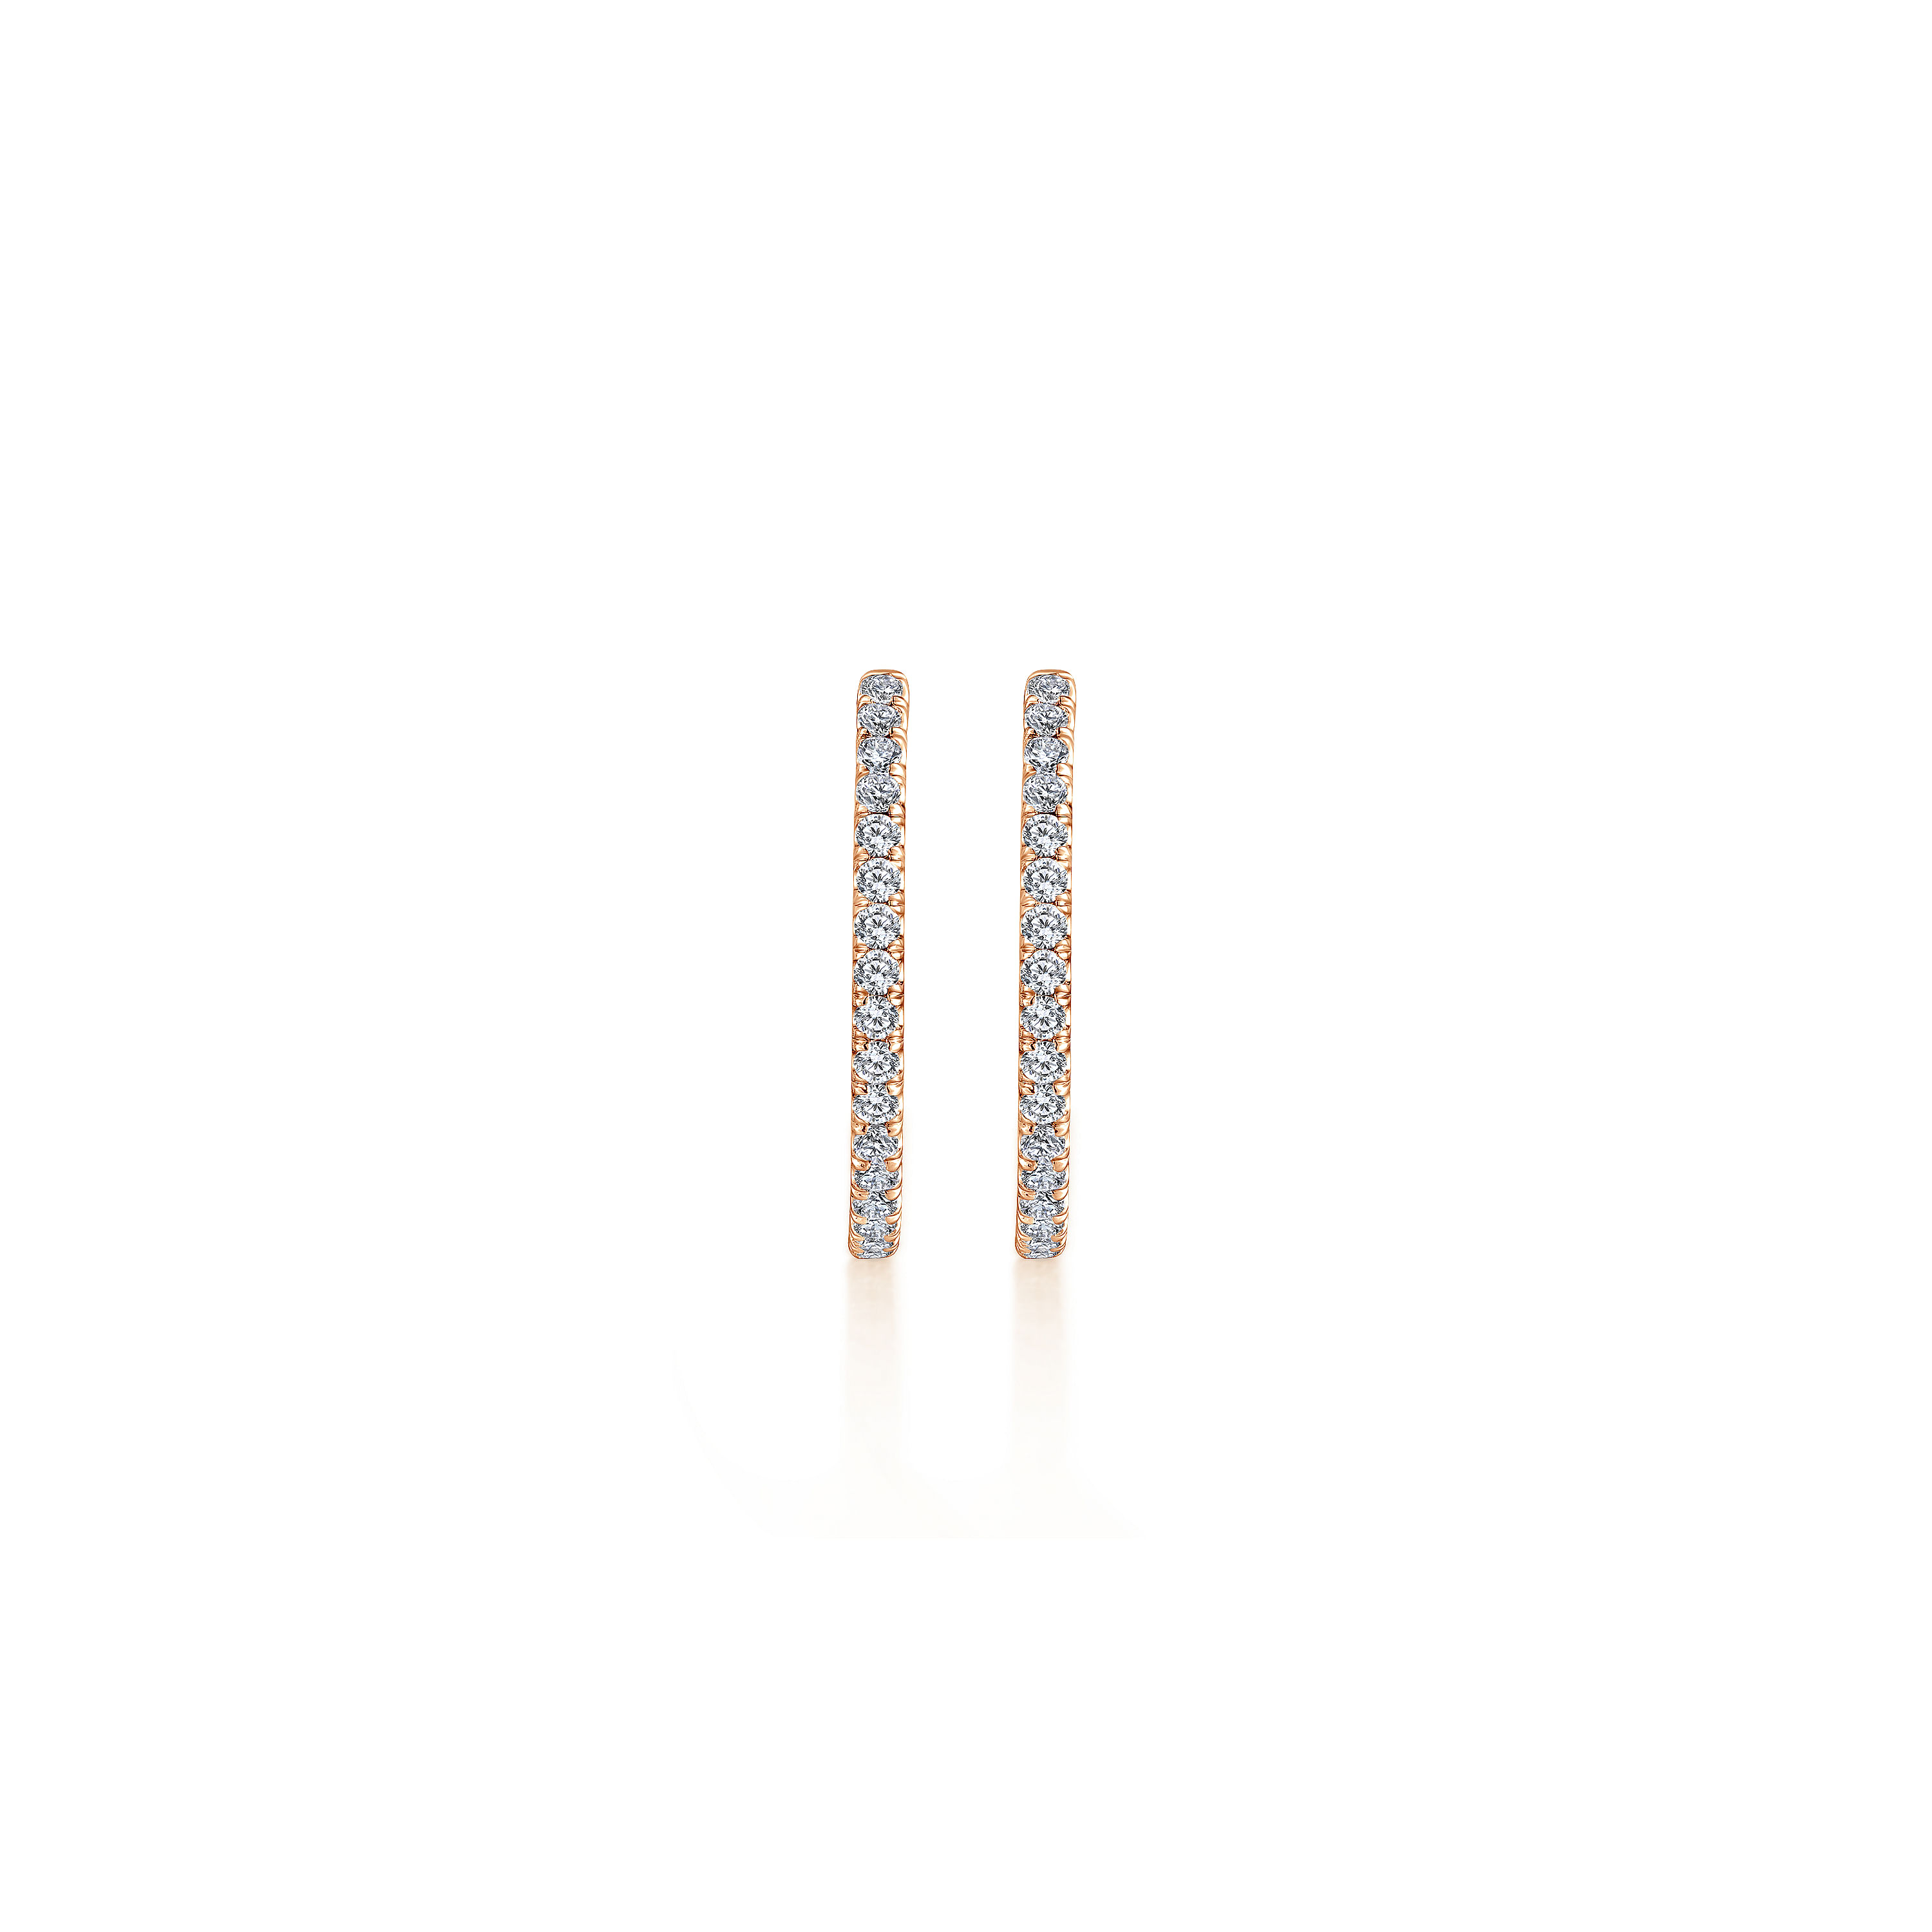 14K Rose Gold French Pavé 20mm Round Inside Out Diamond Hoop Earrings